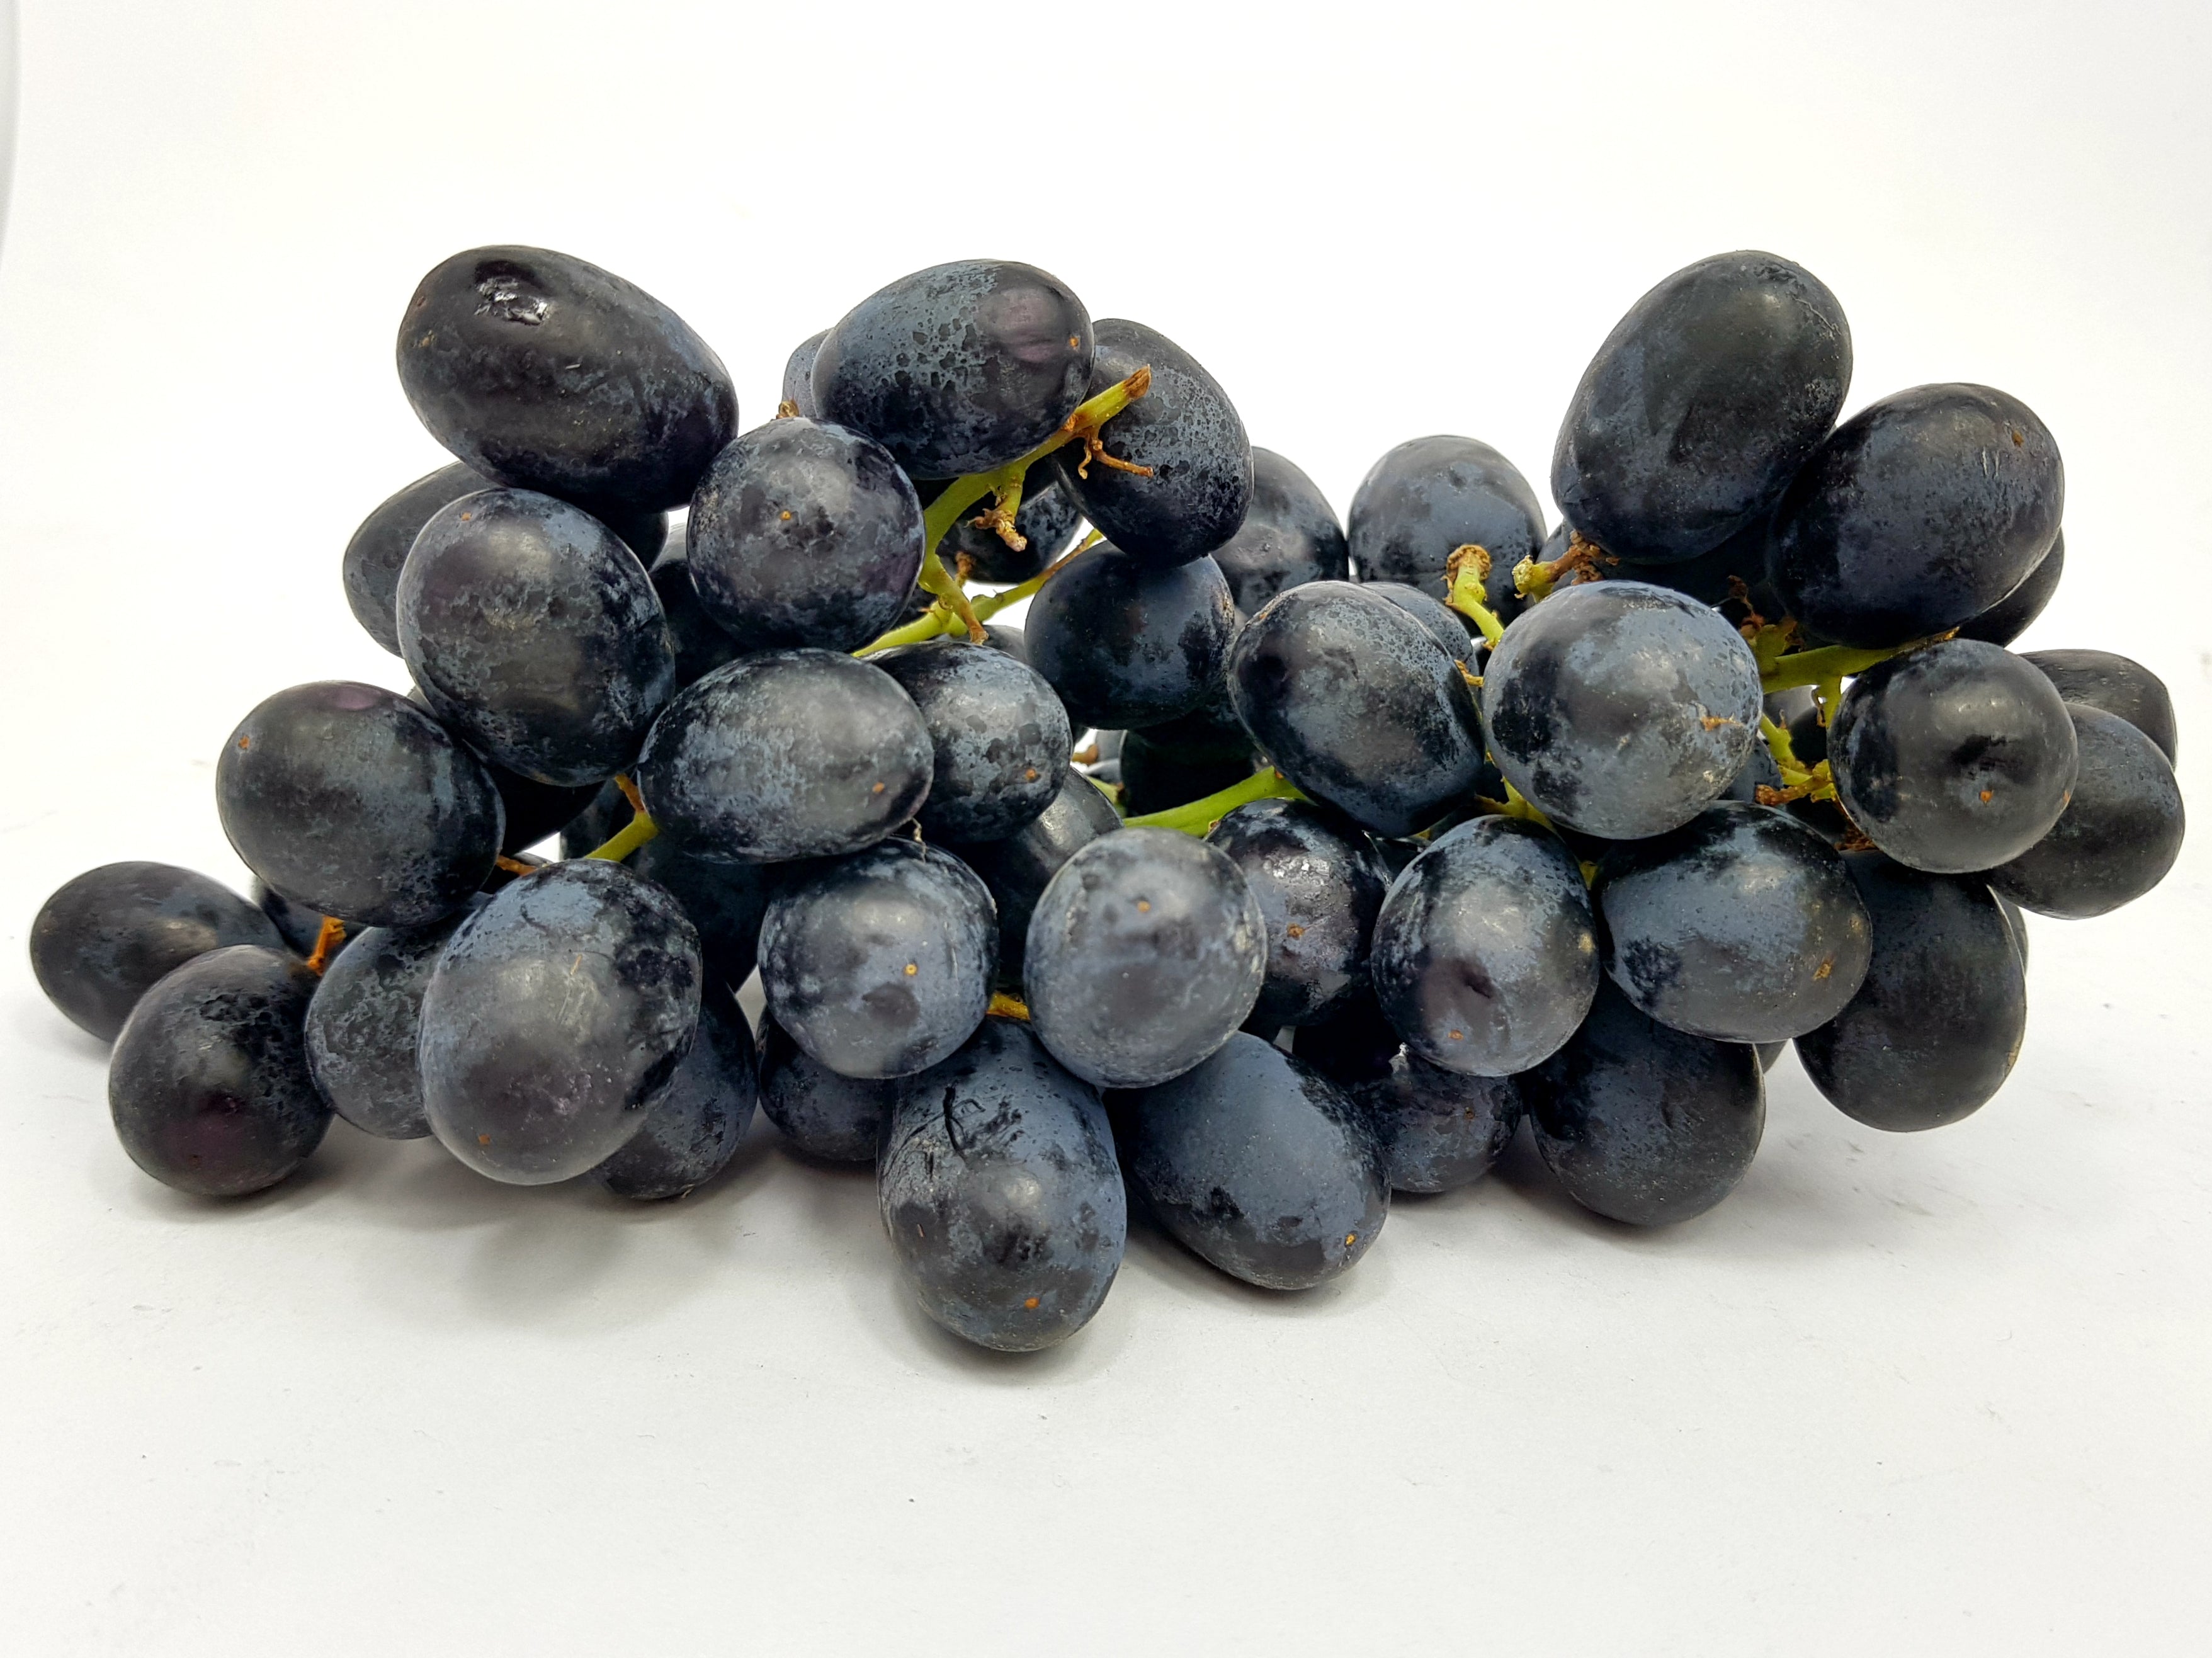 Midnight Beauty Black Seedless Grapes 500g